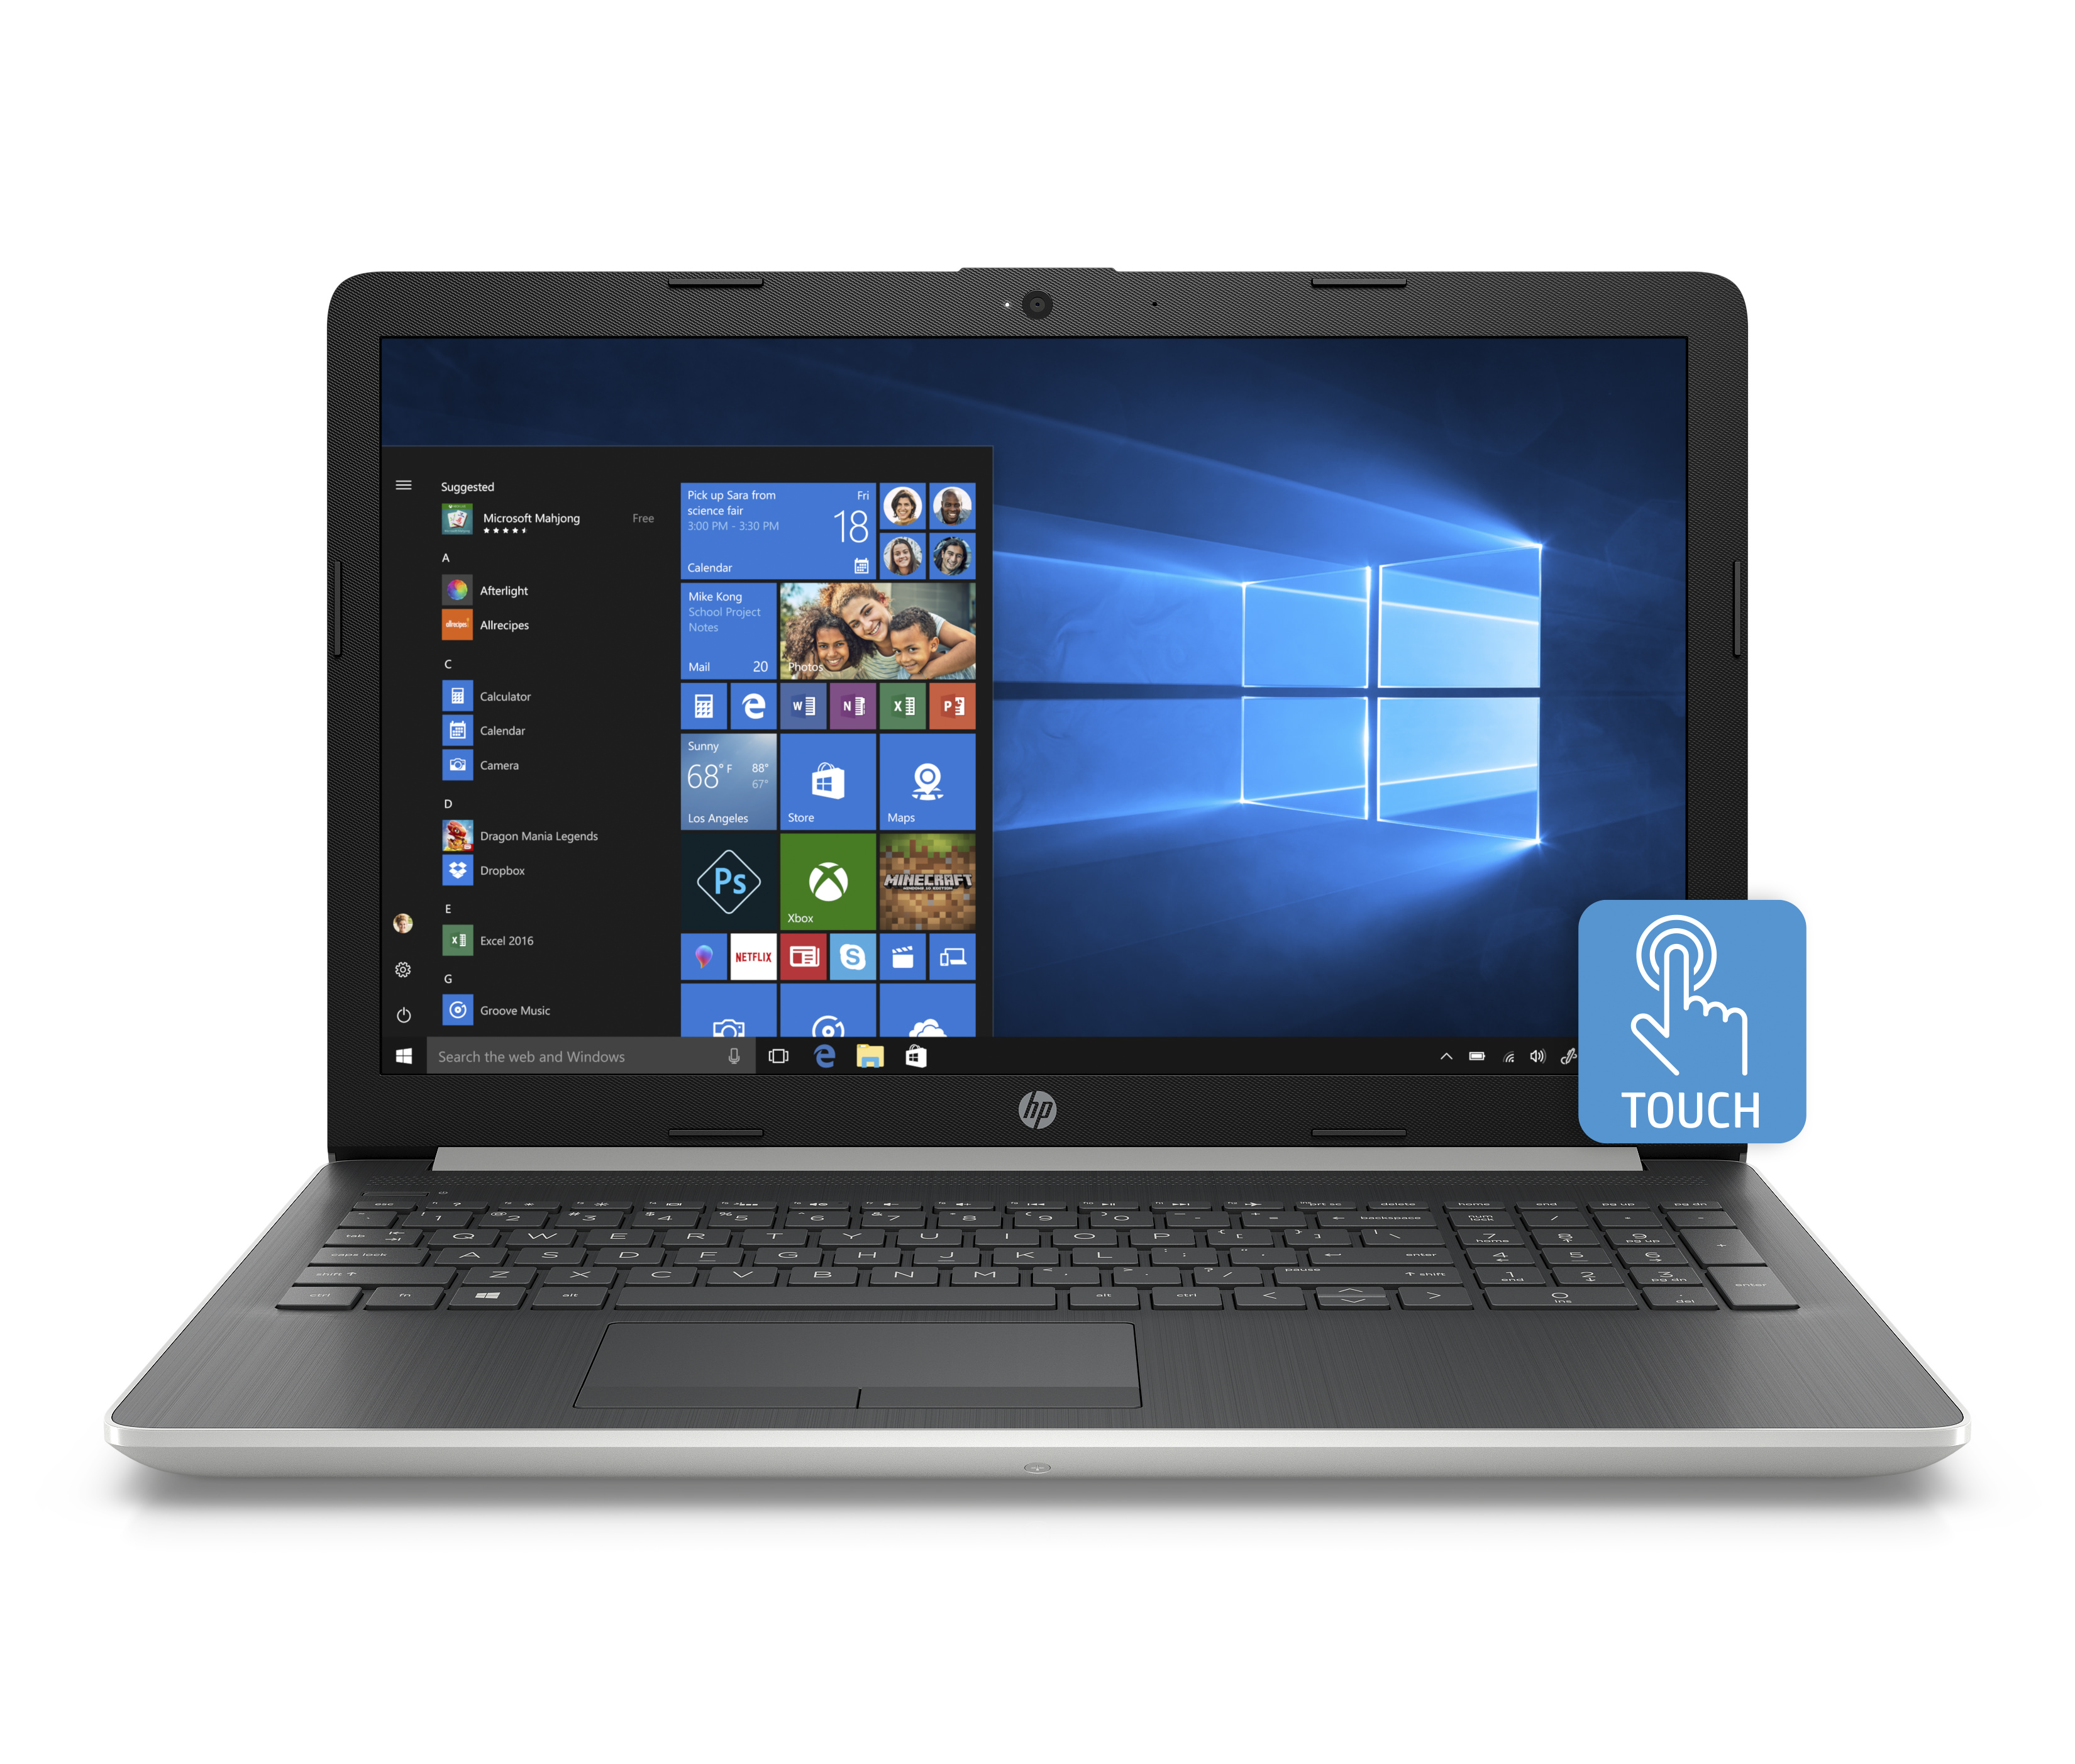 HP 15 Graphite Mist Laptop Touchscreen, Intel Core i5-8250U, 1TB HDD + 16GB Intel Optane memory, 4GB SDRAM, DVD, 15-da0053wm - image 1 of 9